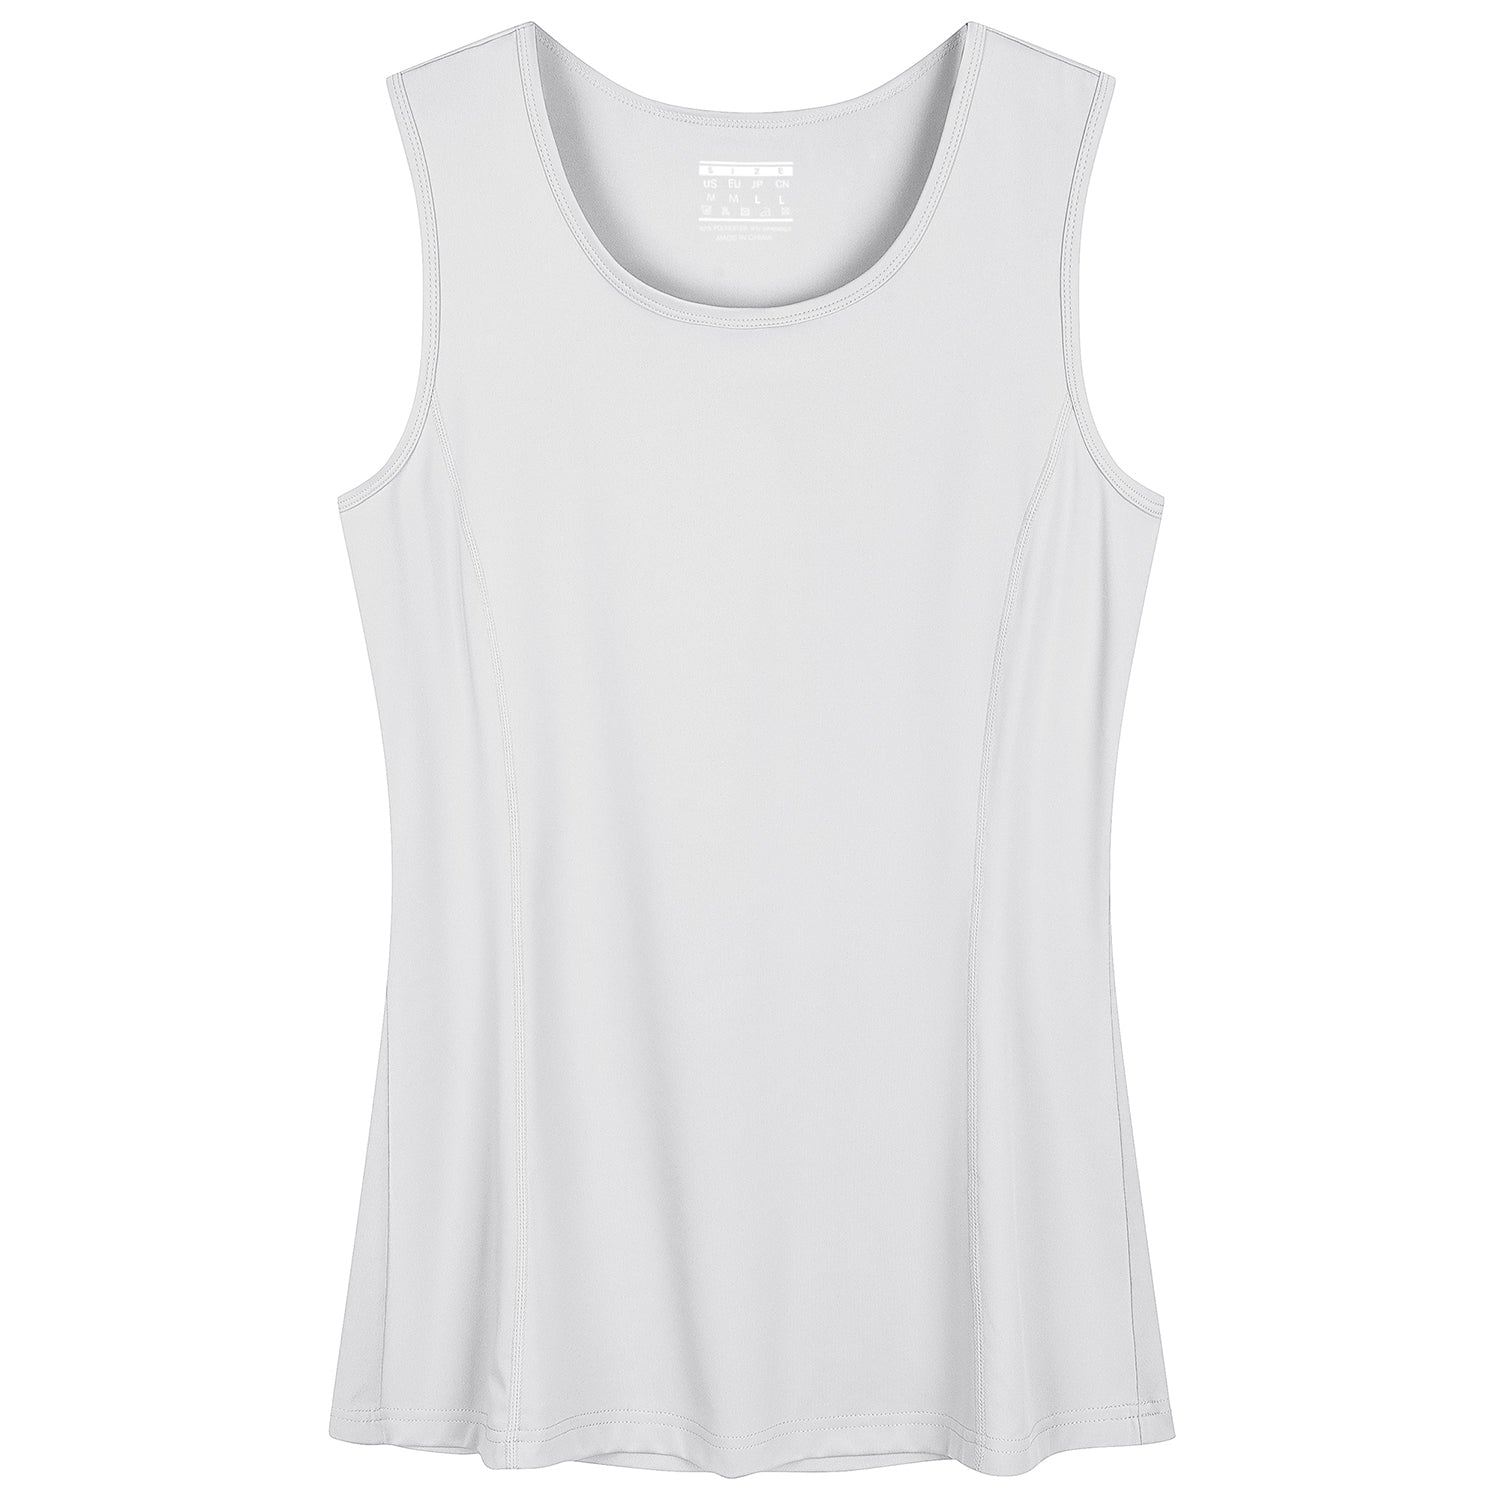 Womens Dri-FIT Tank Tops & Sleeveless Shirts.